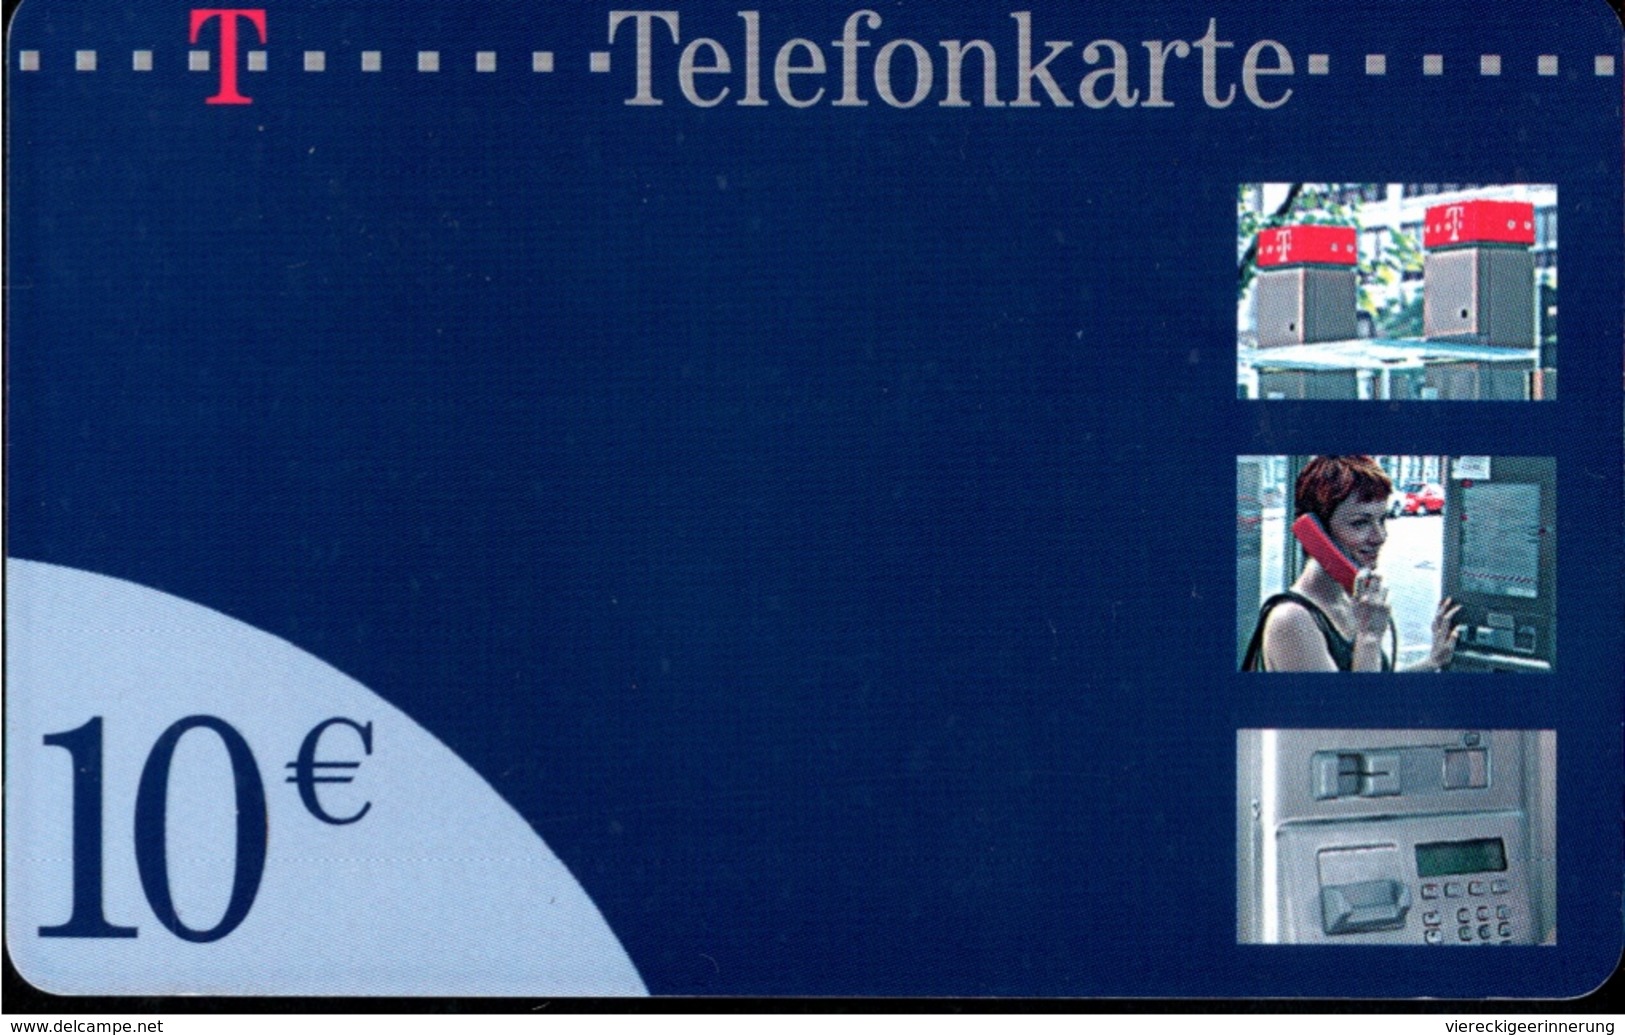 ! 10 € Telefonkarte, Telecarte, Phonecard, 2004, PD02, Germany - P & PD-Series : D. Telekom Till